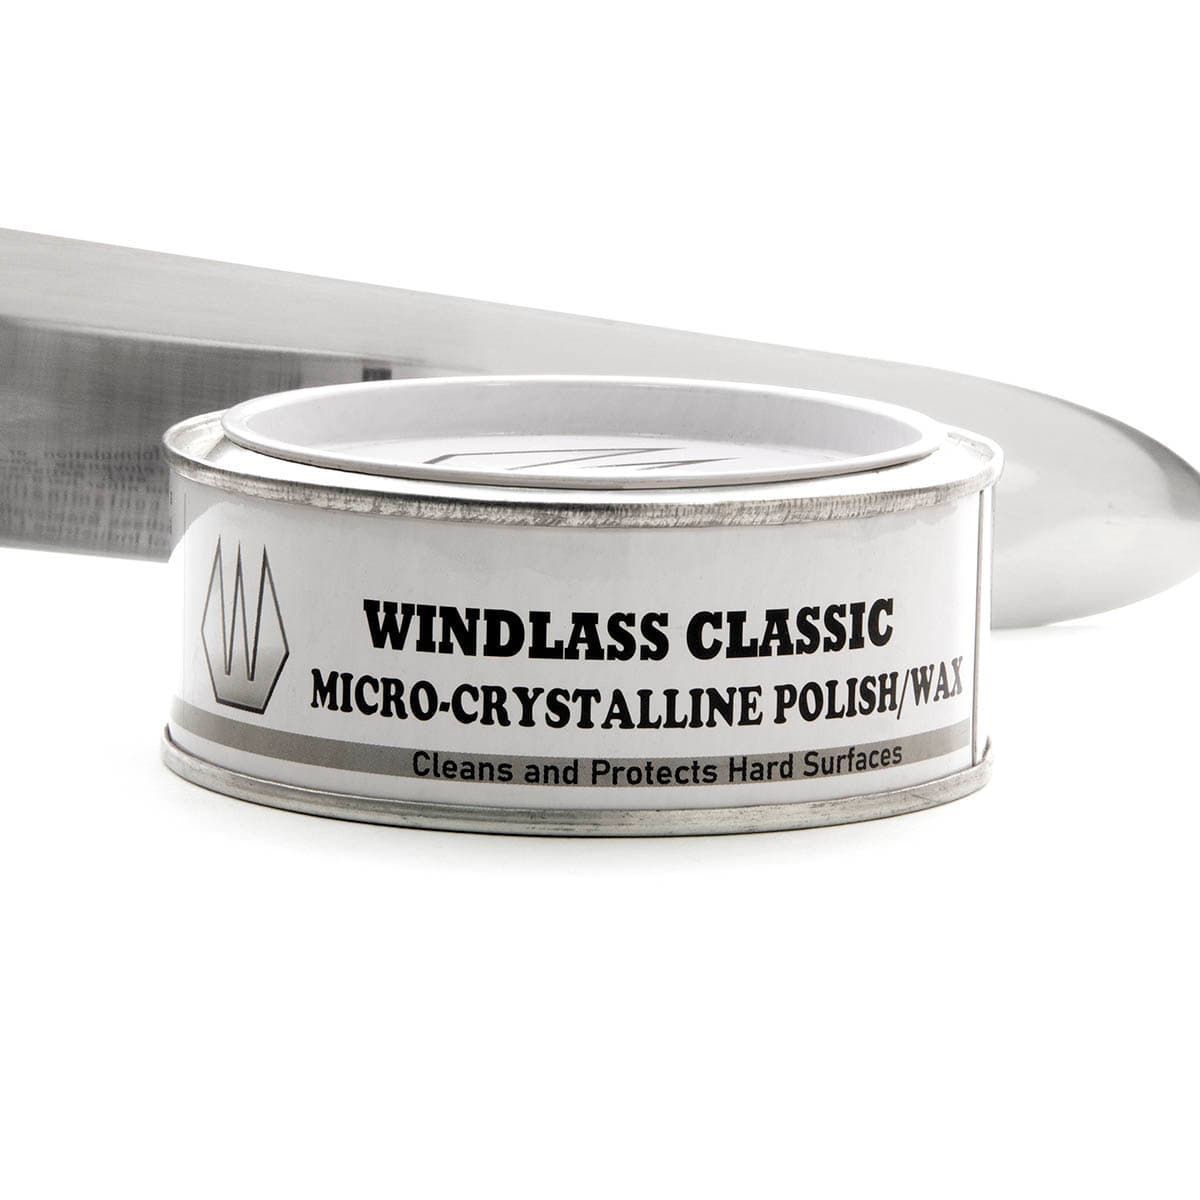 Windlass Classic Micro-Crystalline Polish/Wax - 250 ml